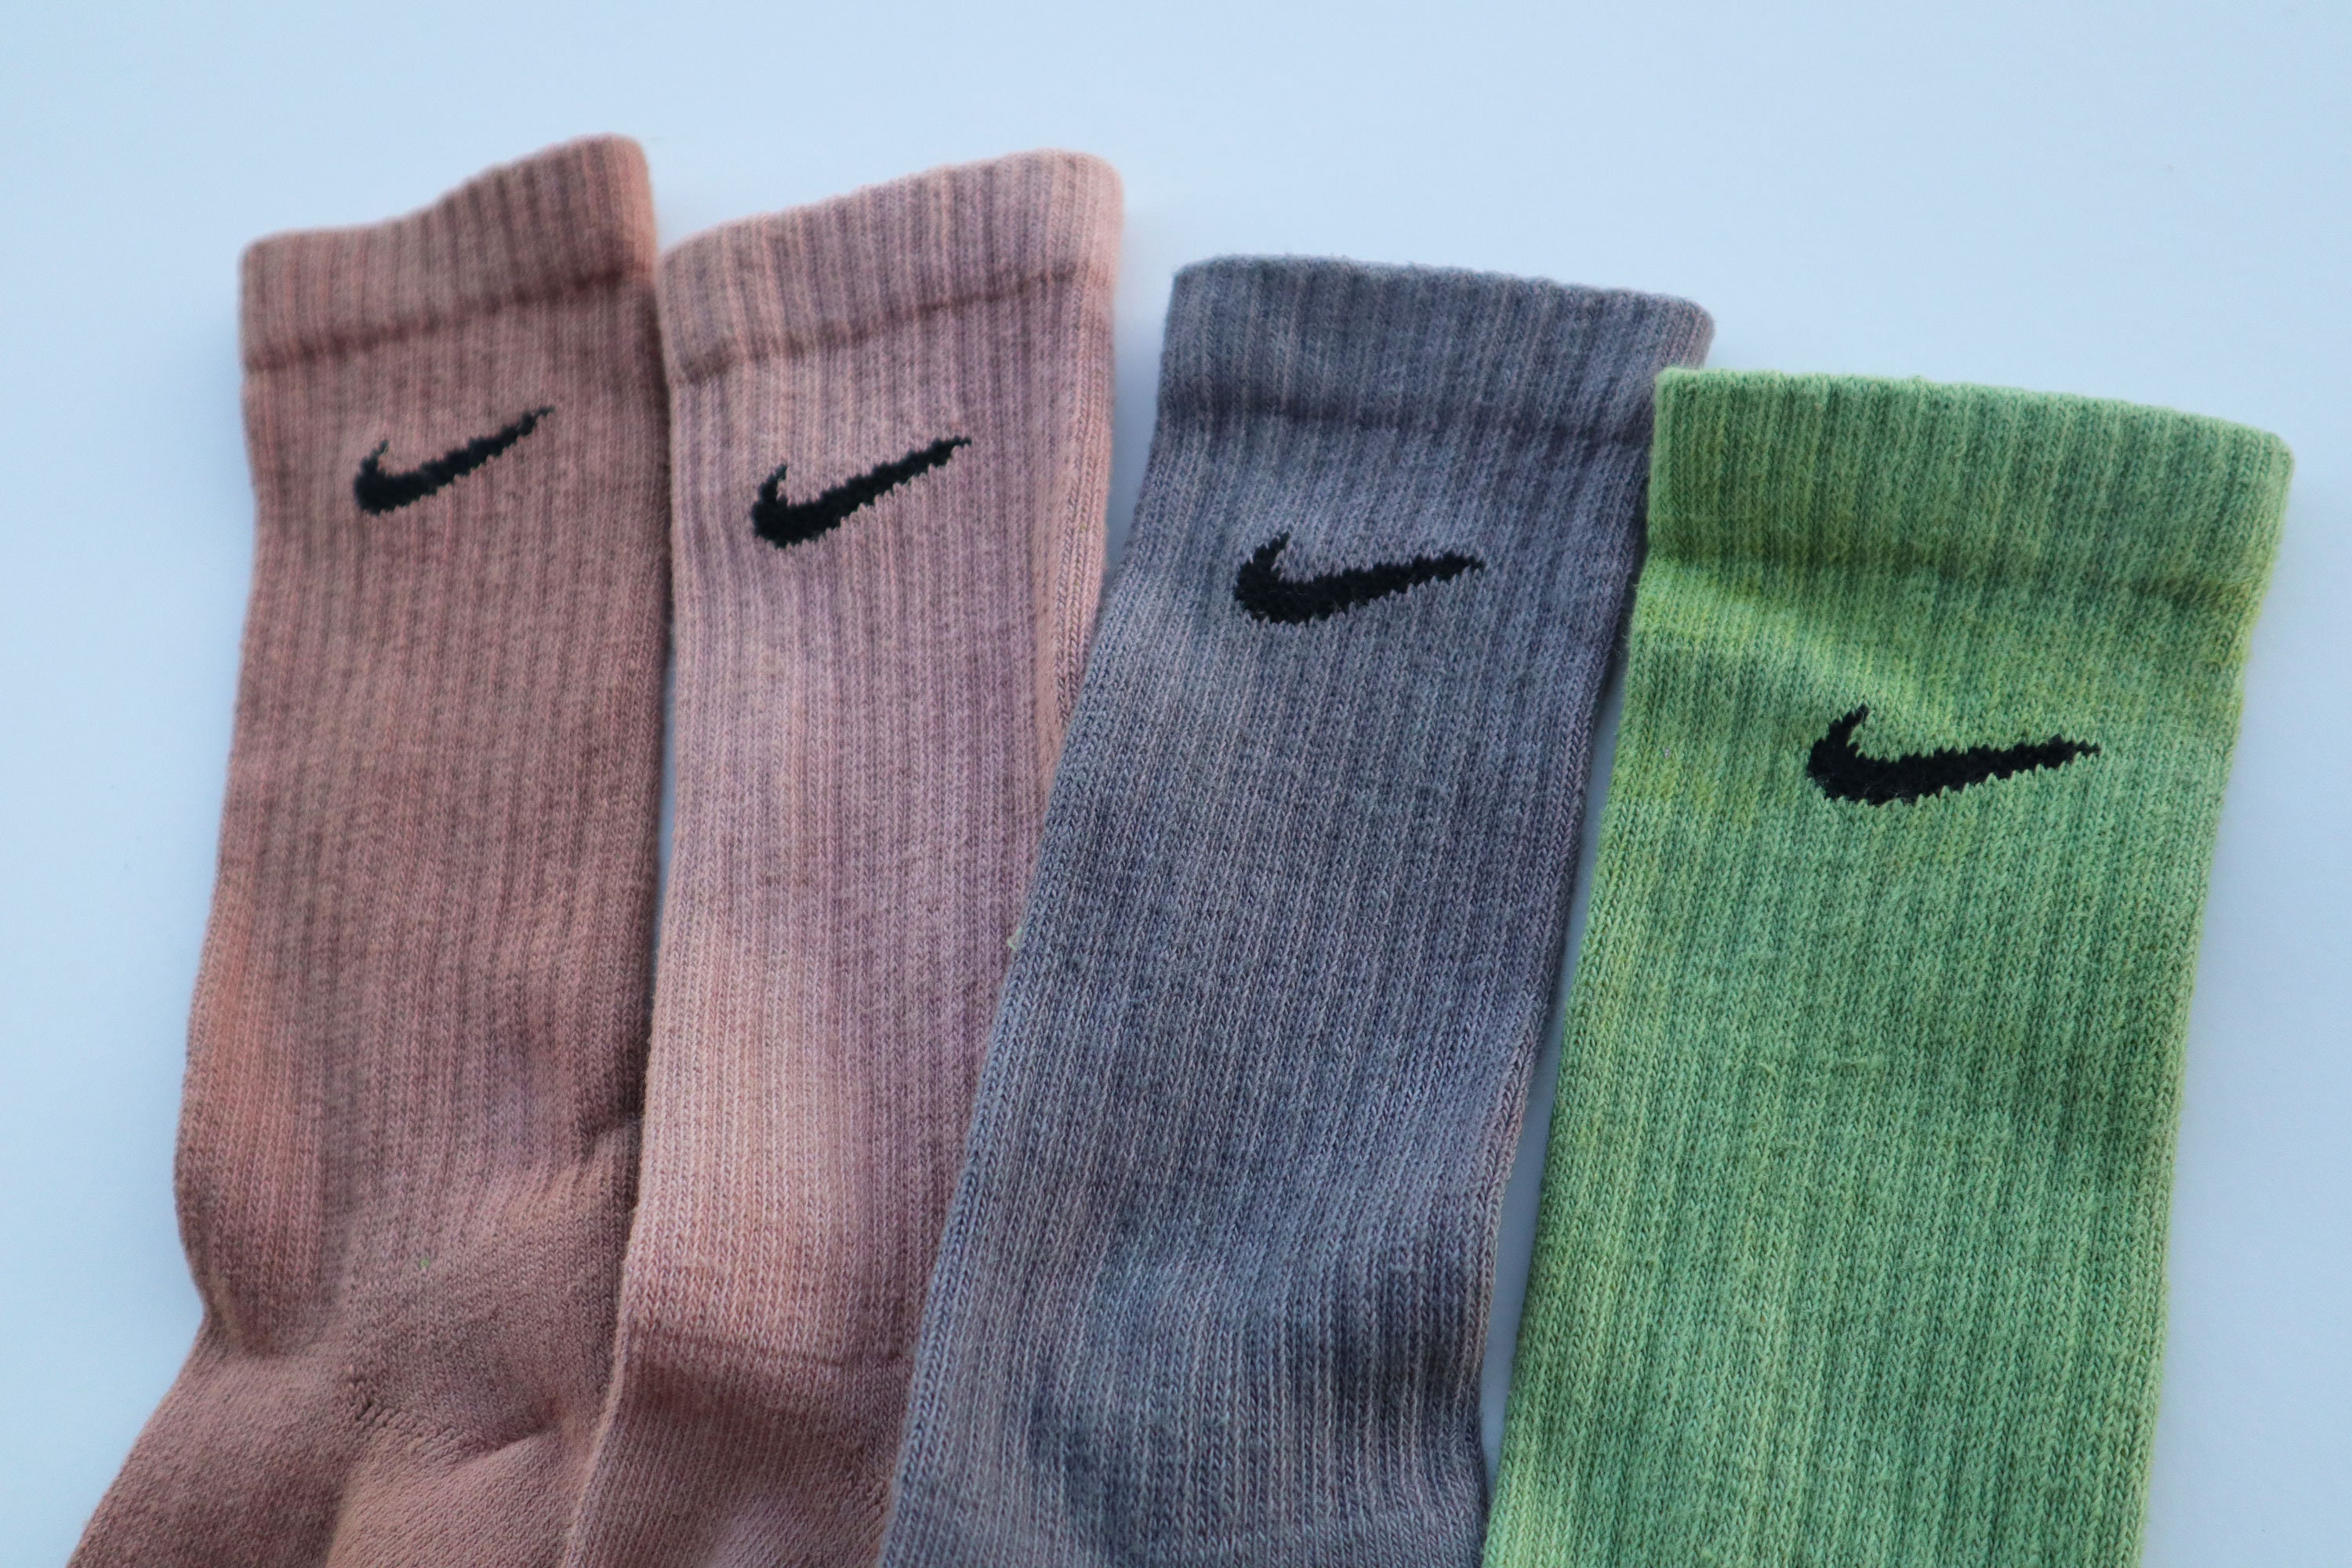 Nike Nude Solid Dye Socks Neutral/Nude Dyed Nike Socks Nude | Etsy